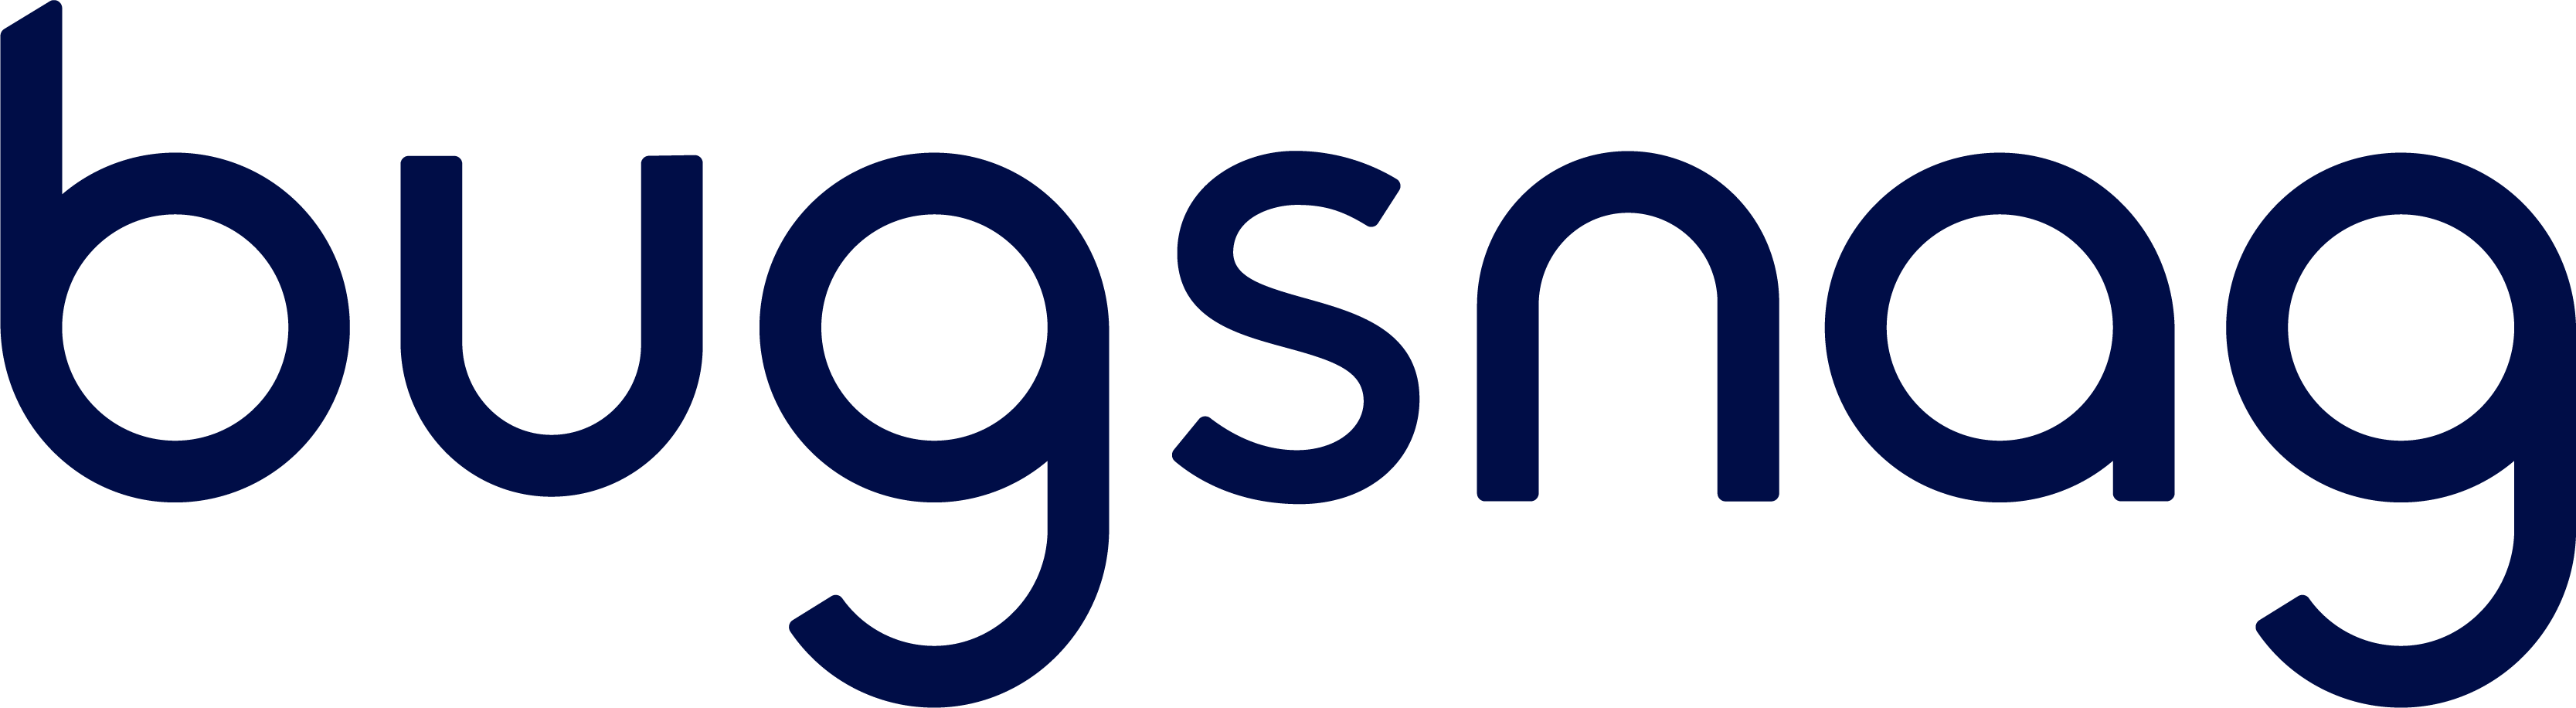 Bugsnag logo for Pivotal Tracker integration